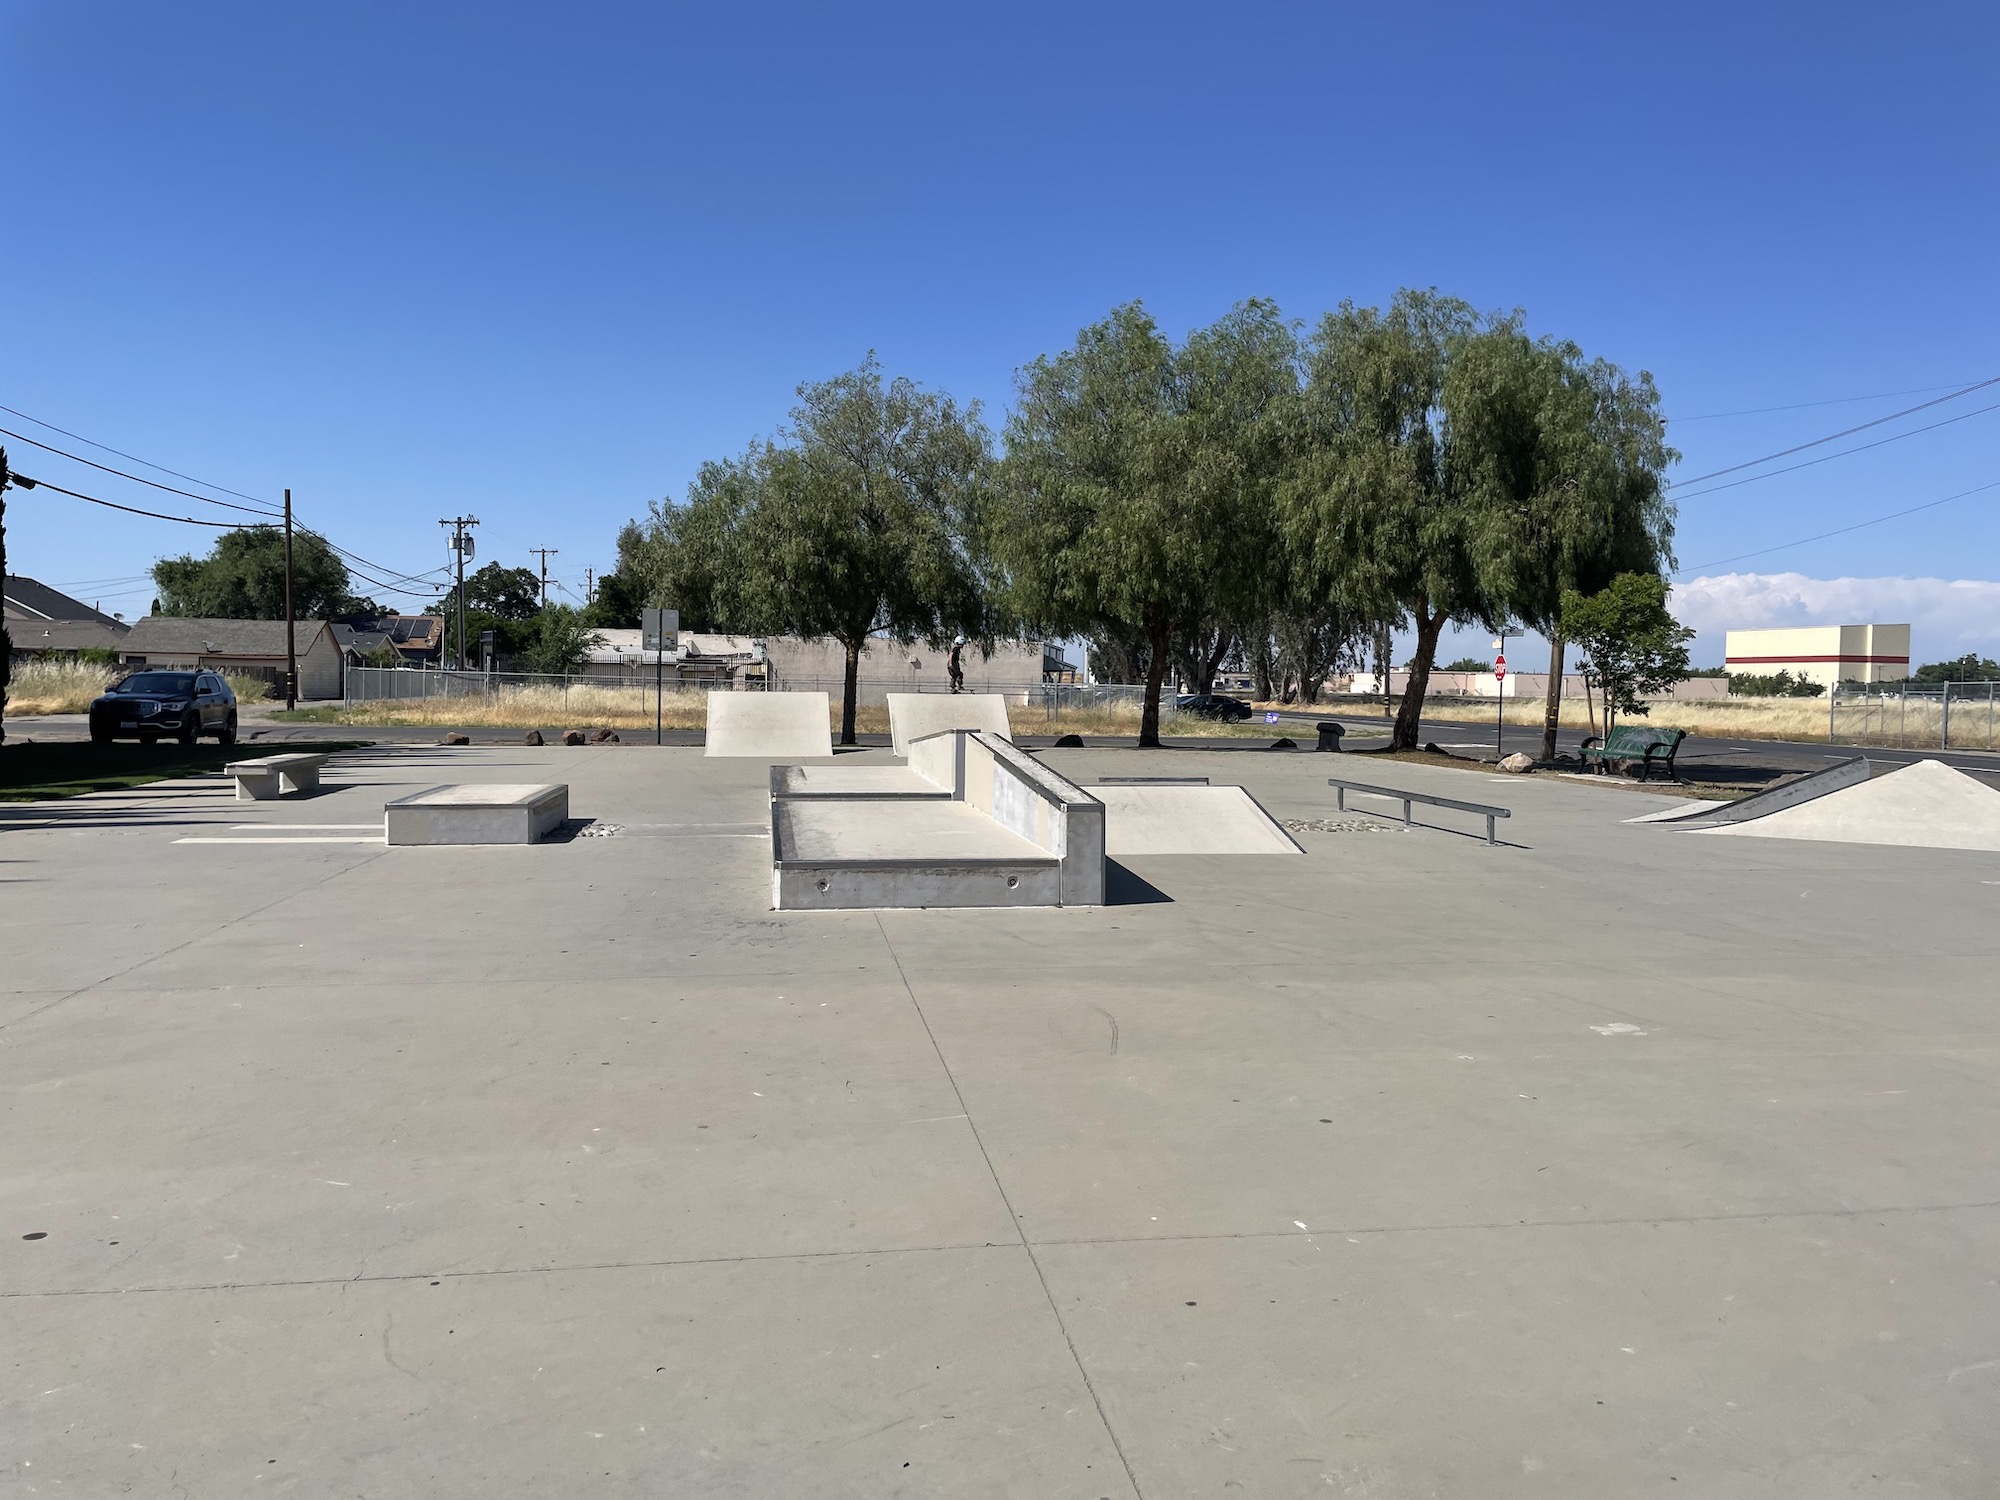 Lathrop skatepark